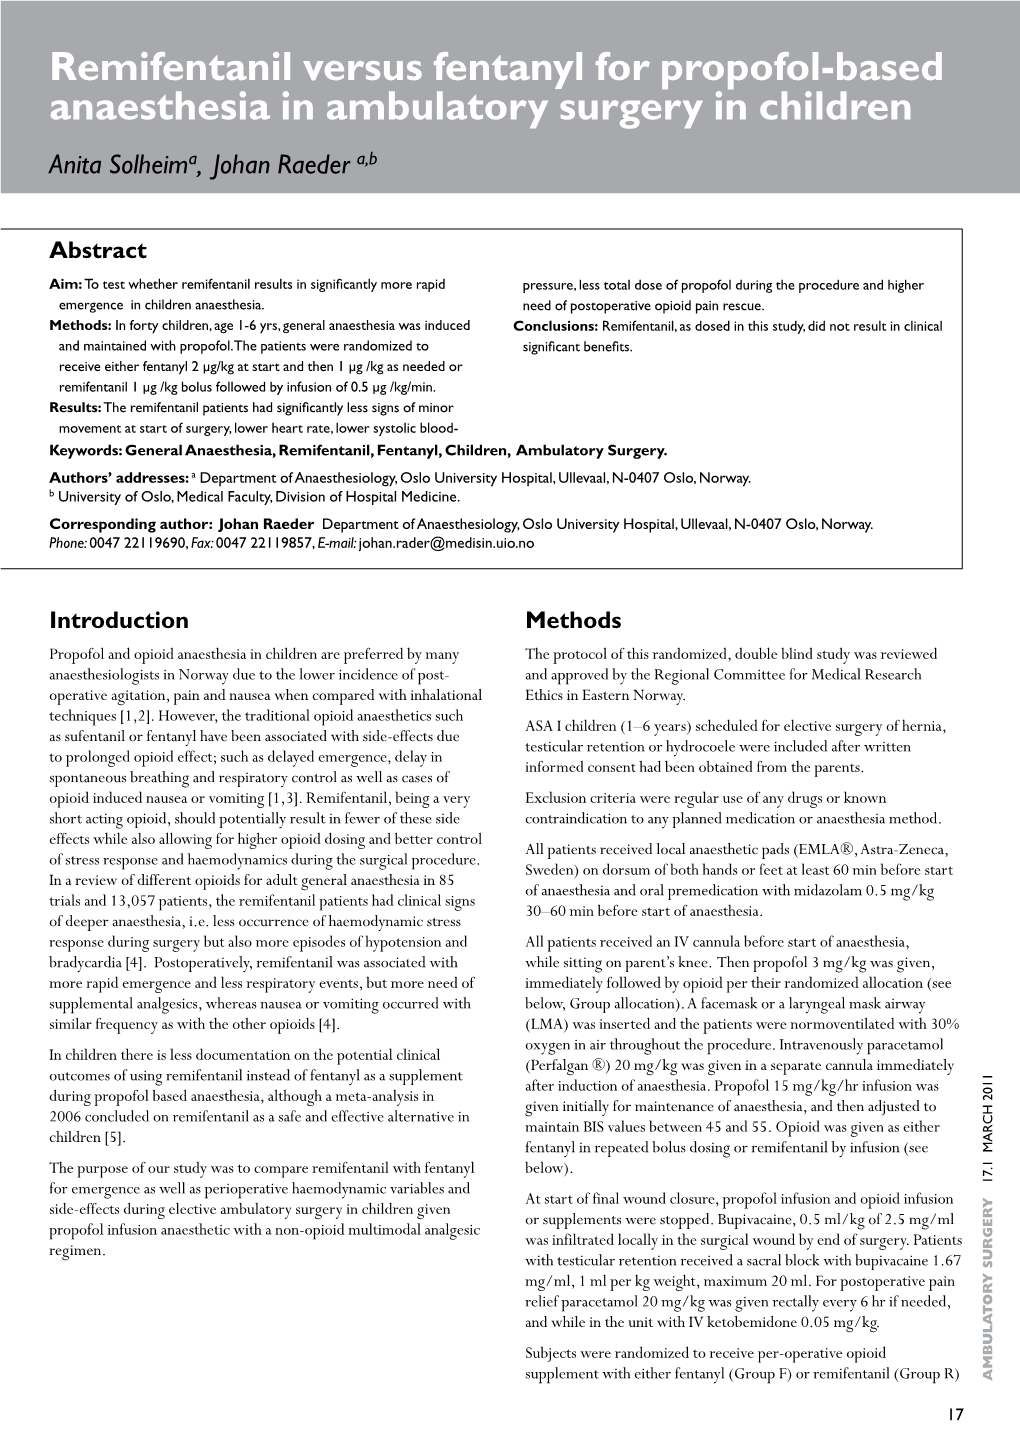 Remifentanil Versus Fentanyl for Propofol-Based Anaesthesia in Ambulatory Surgery in Children Anita Solheima, Johan Raeder A,B